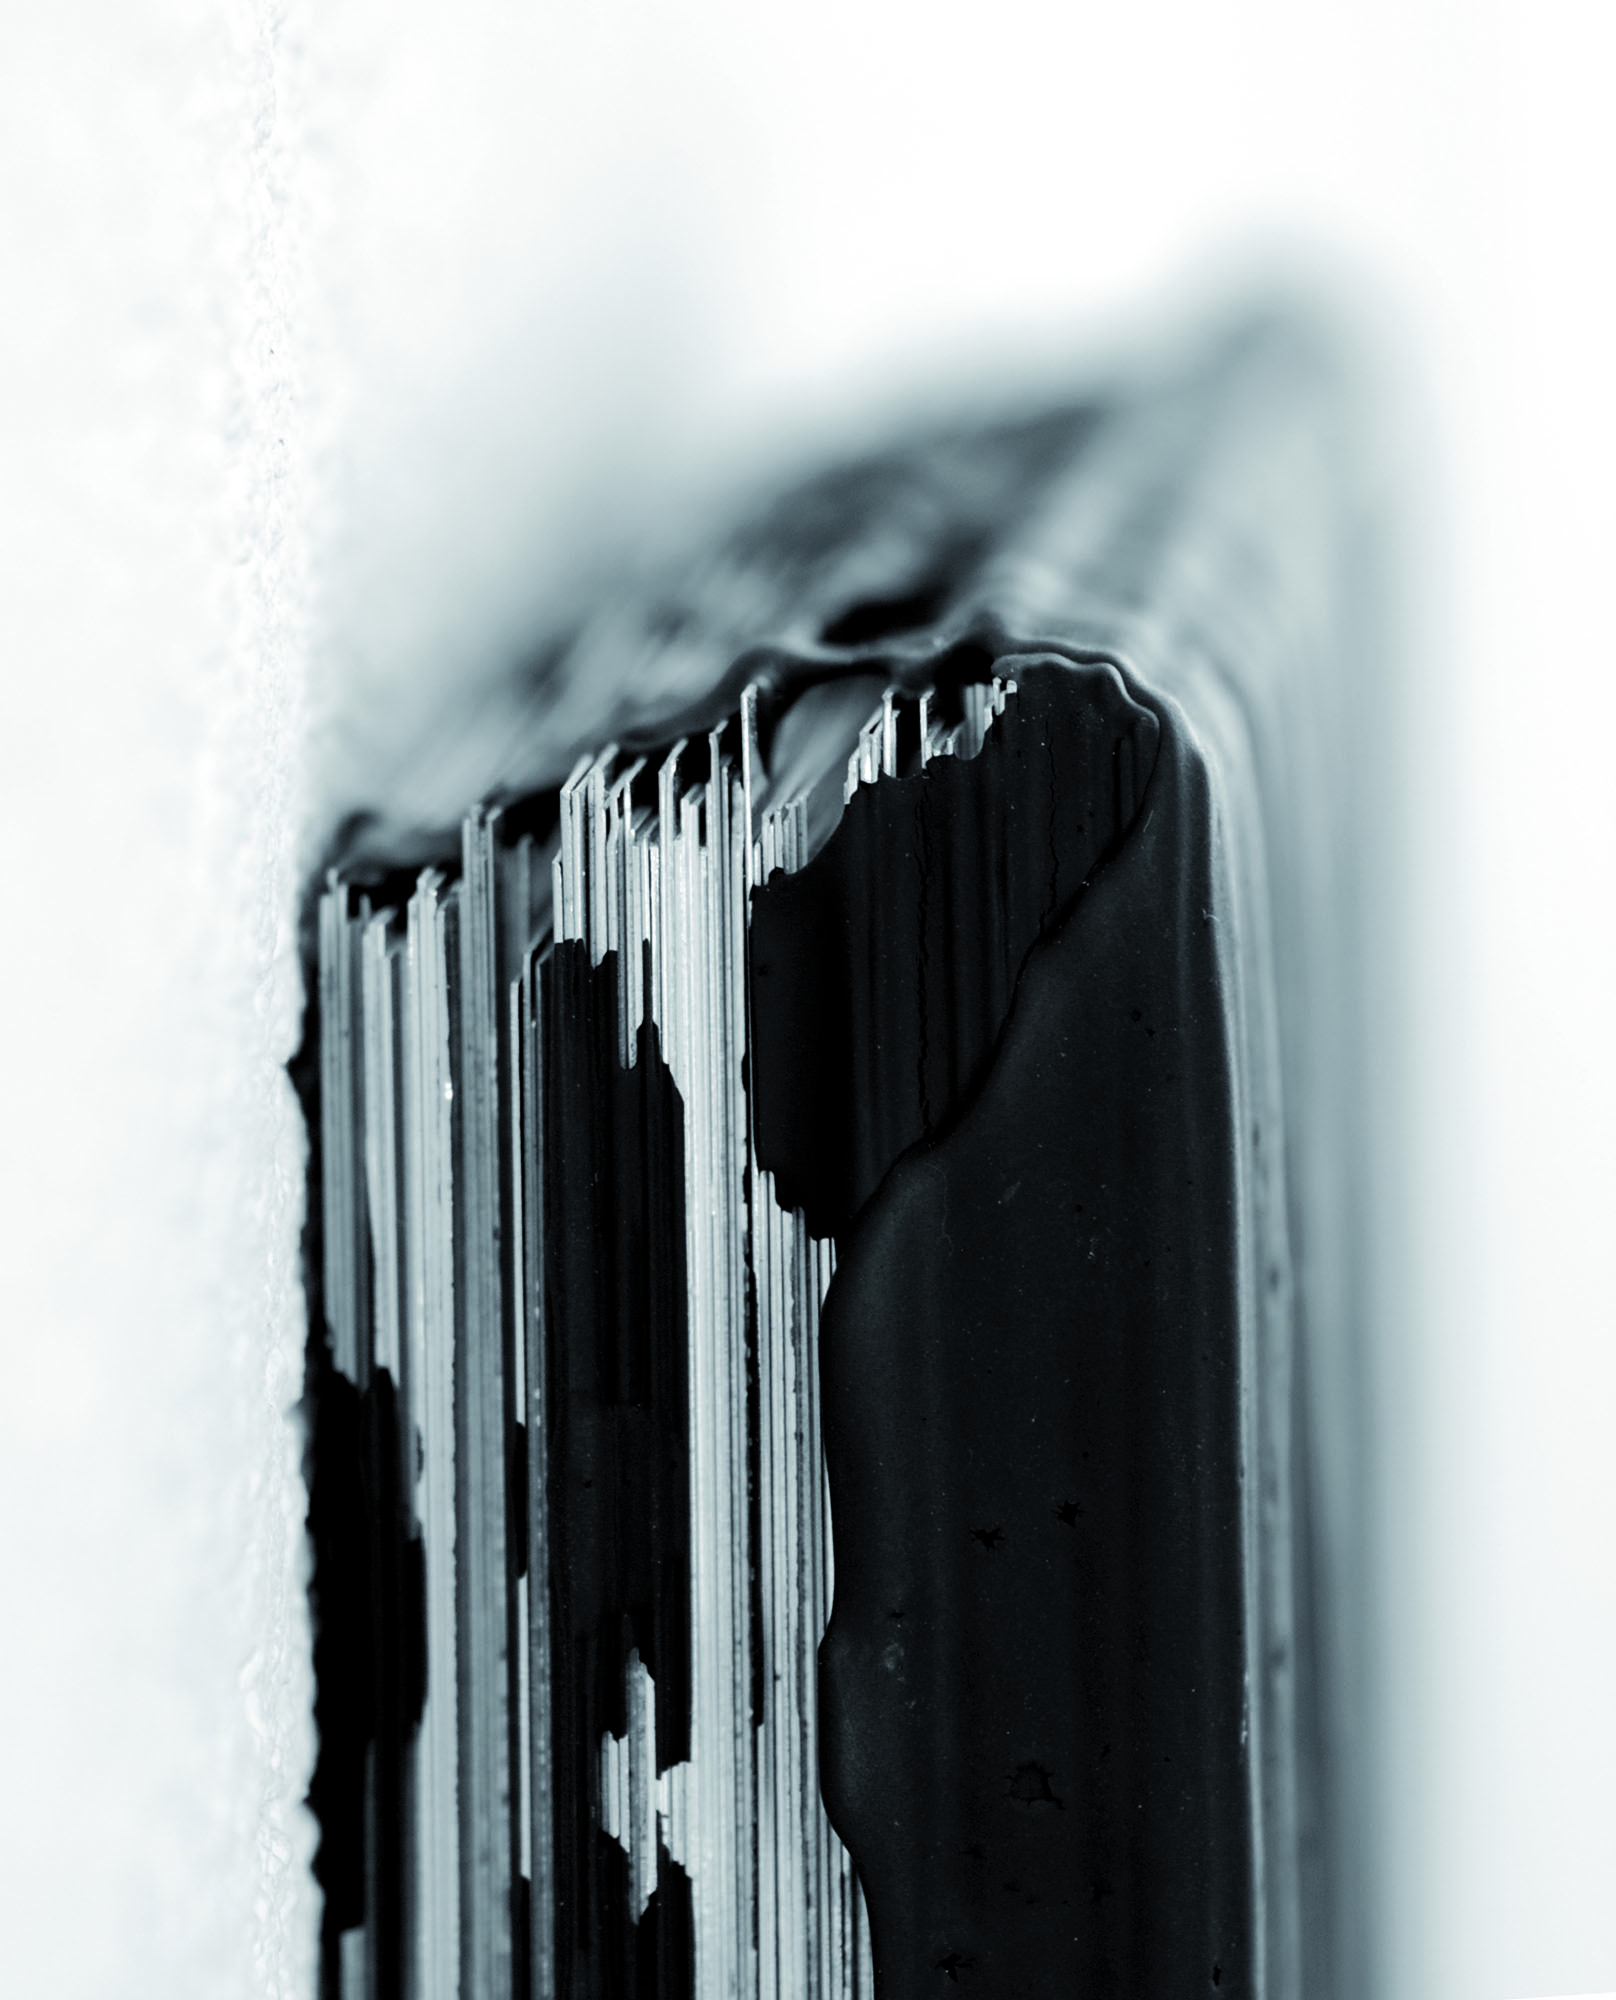 Impact Cube 25 (Detail), 2010  Offsetplatten/Vinyl/Quarz 72,5 x 98,5 x 4,5 cm